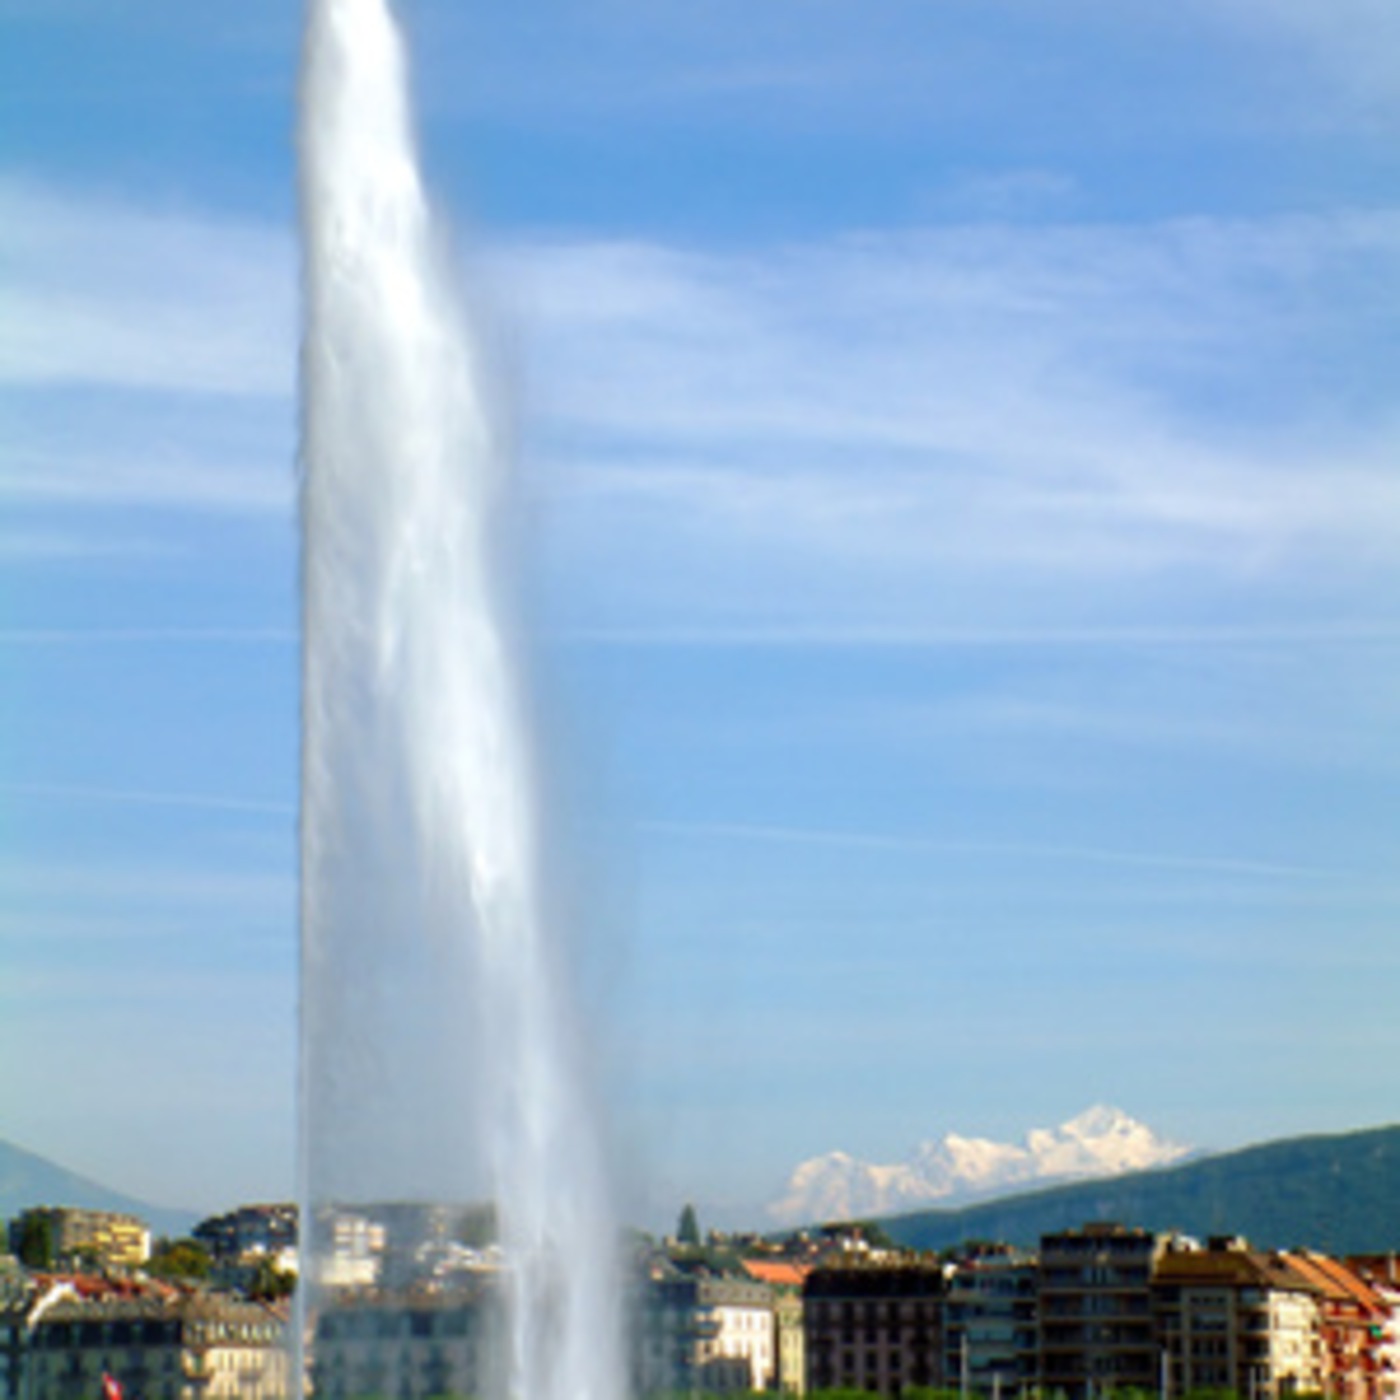 2.Nika-quide. Fountain of Geneva. Jet d'eau, Женевский фонтан.